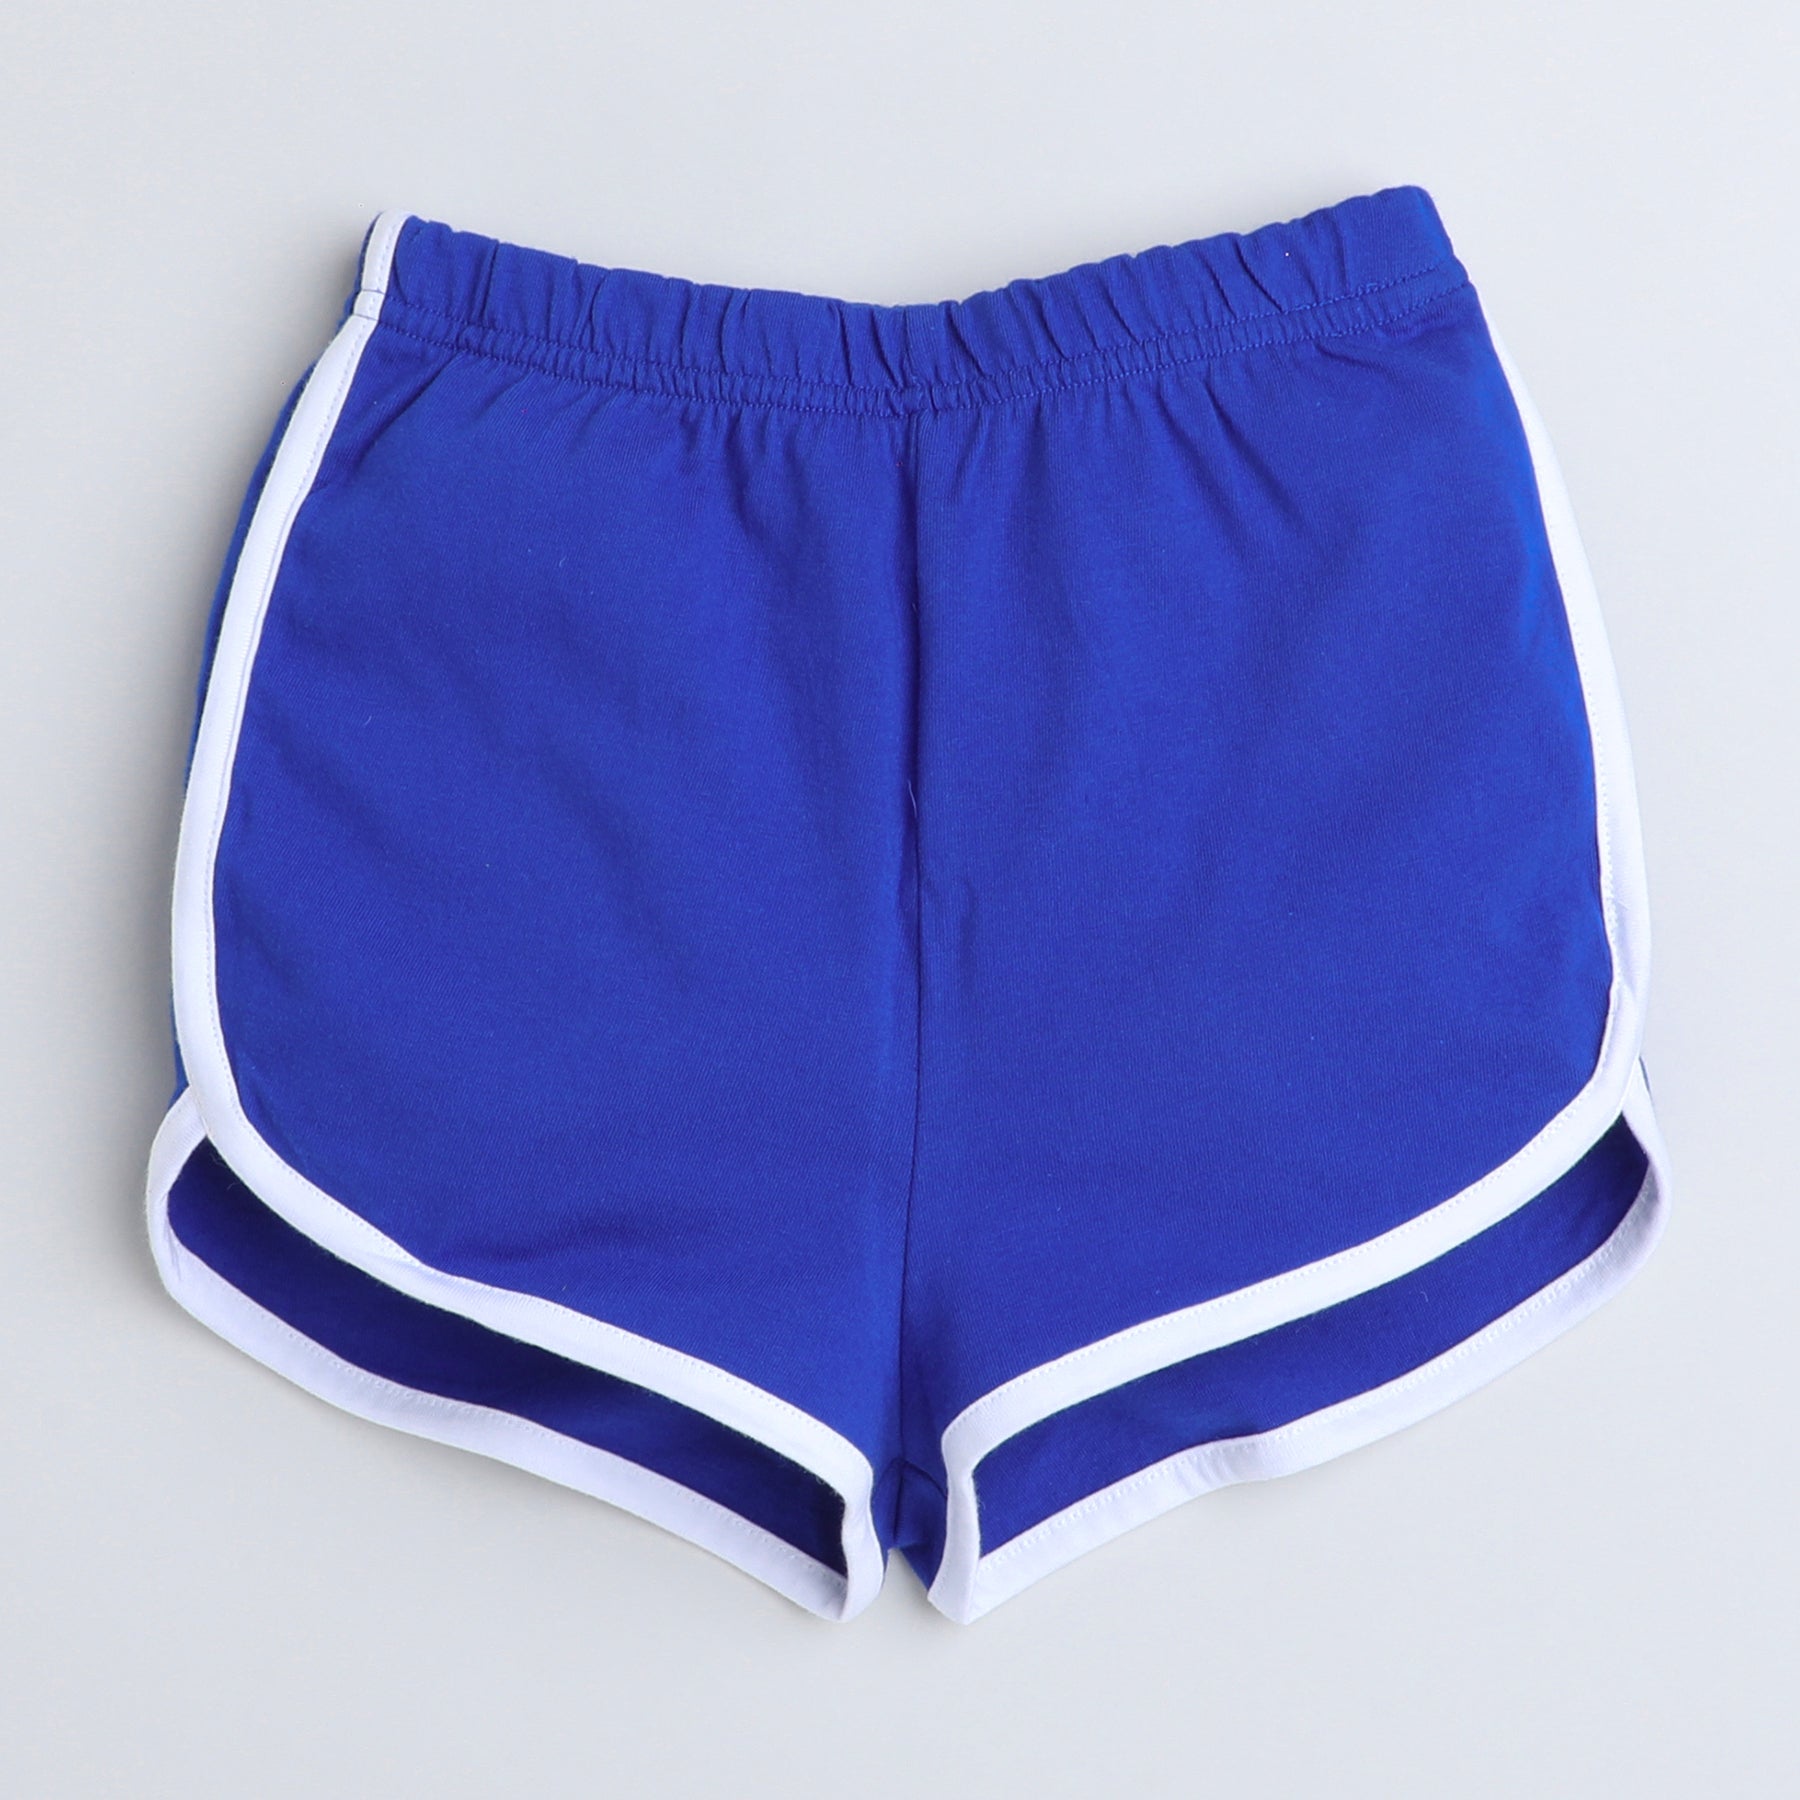 blue shorts for girls